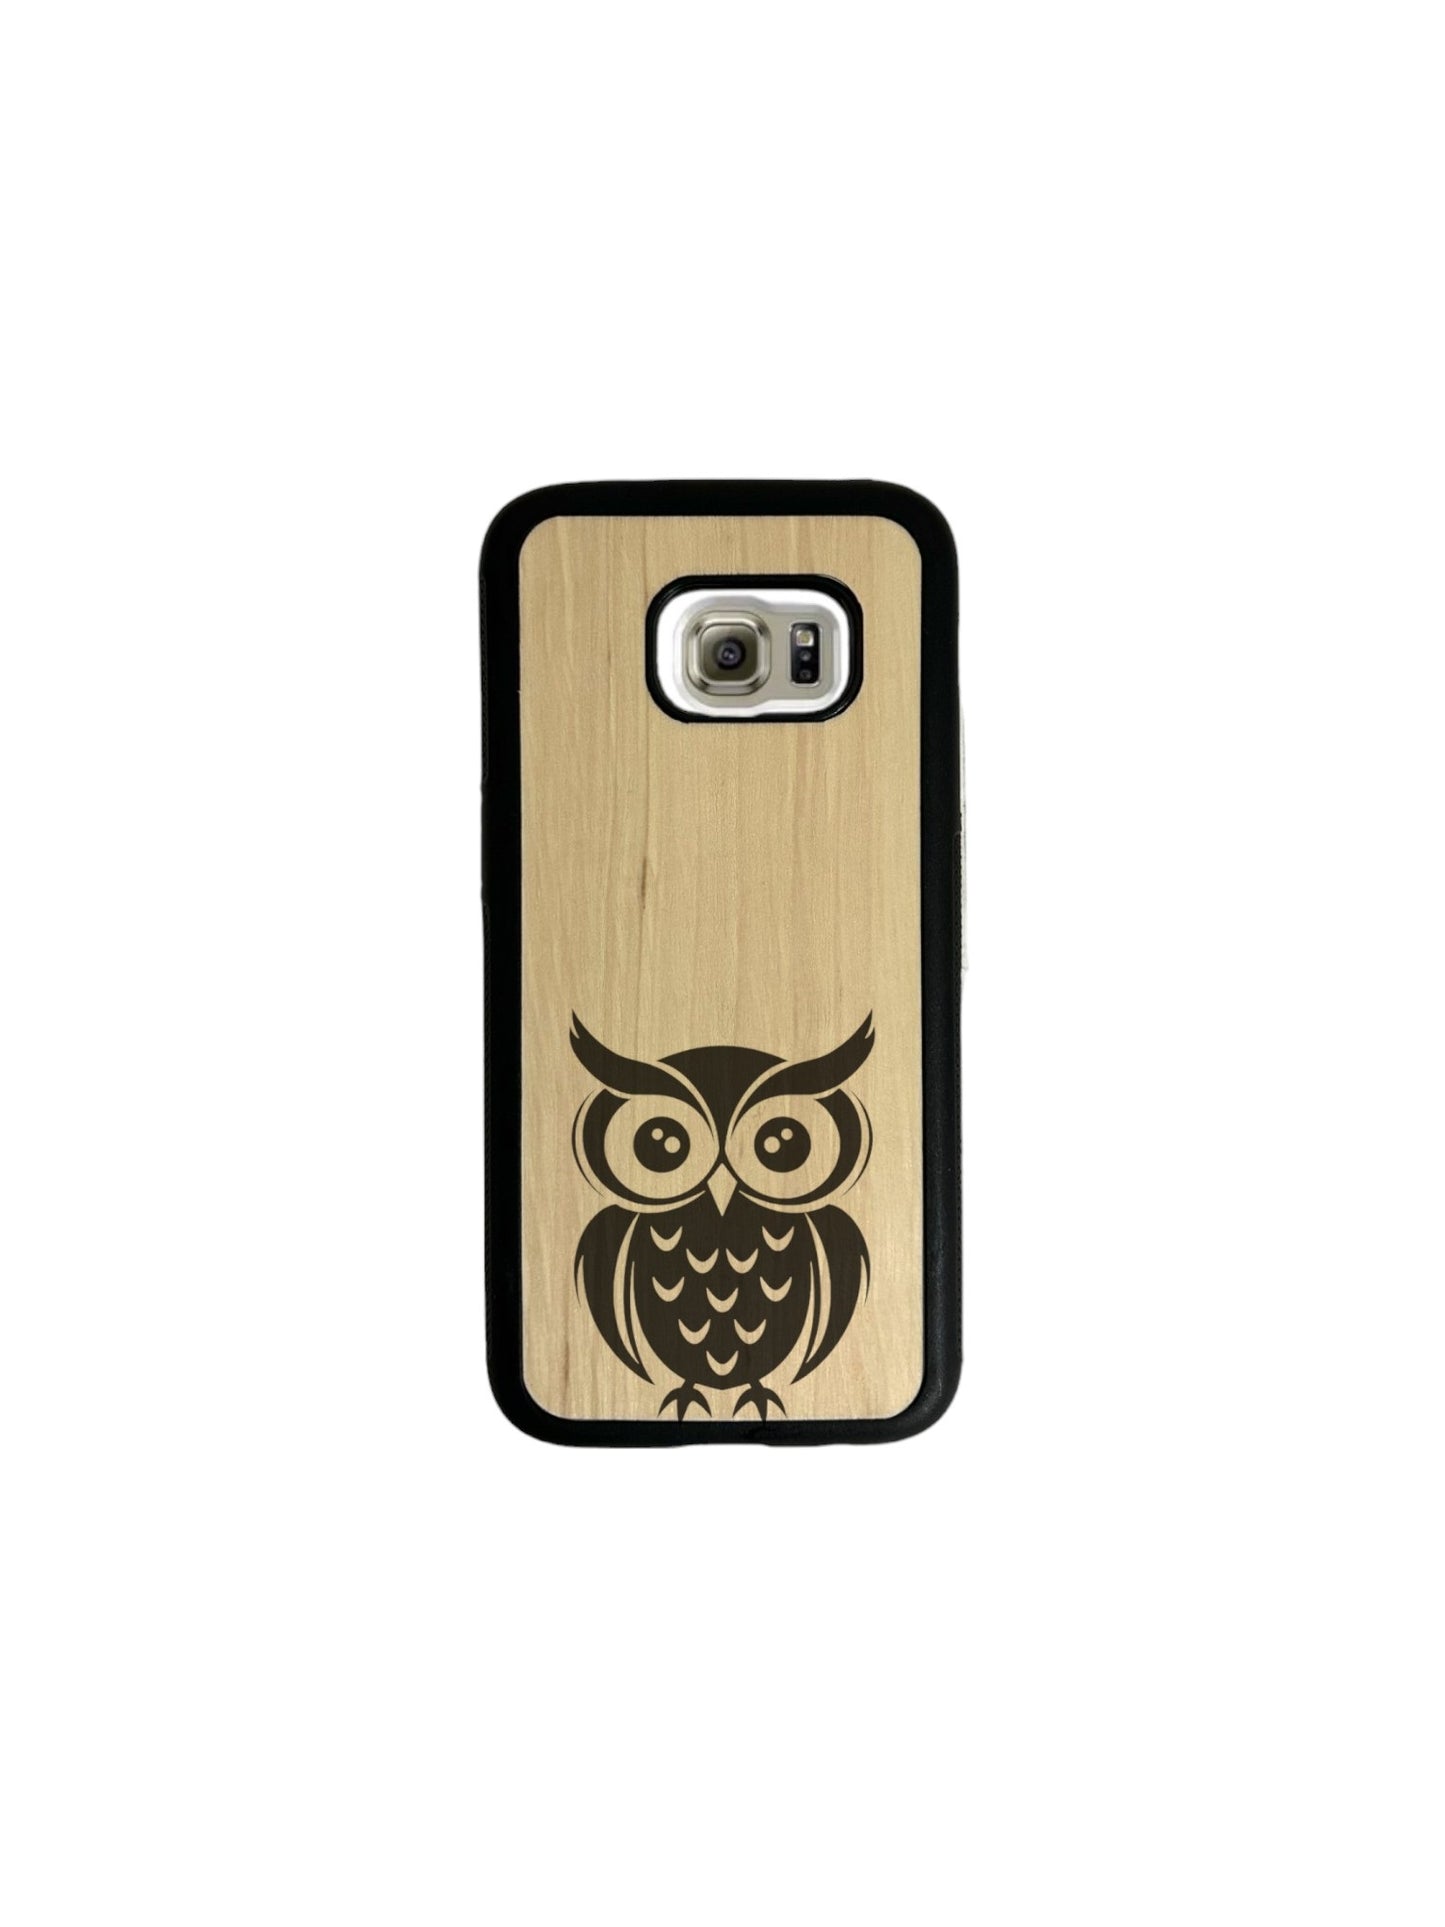 Samsung Galaxy S case - The owl